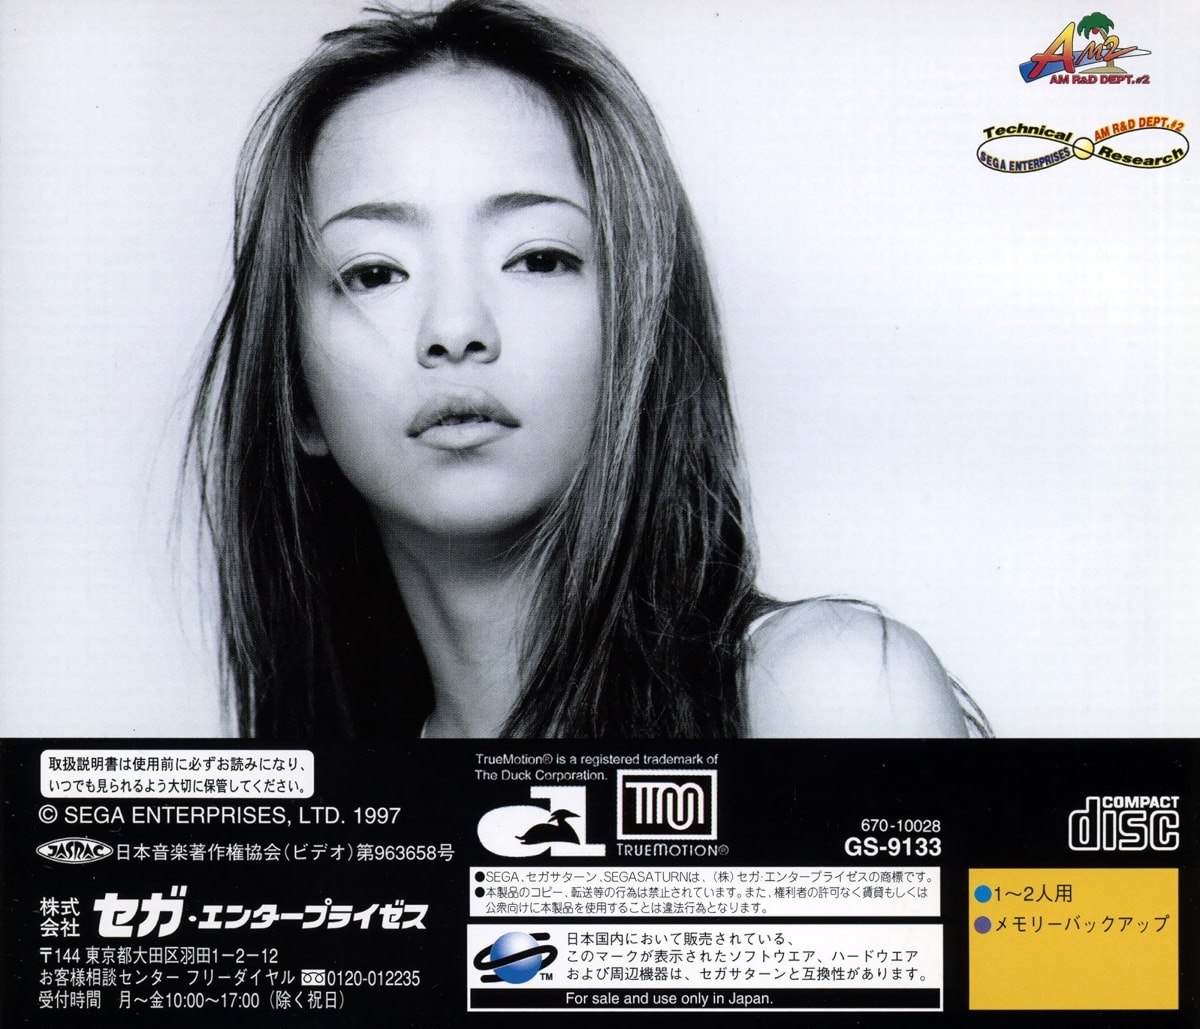 Digital Dance Mix Vol. 1 Namie Amuro cover